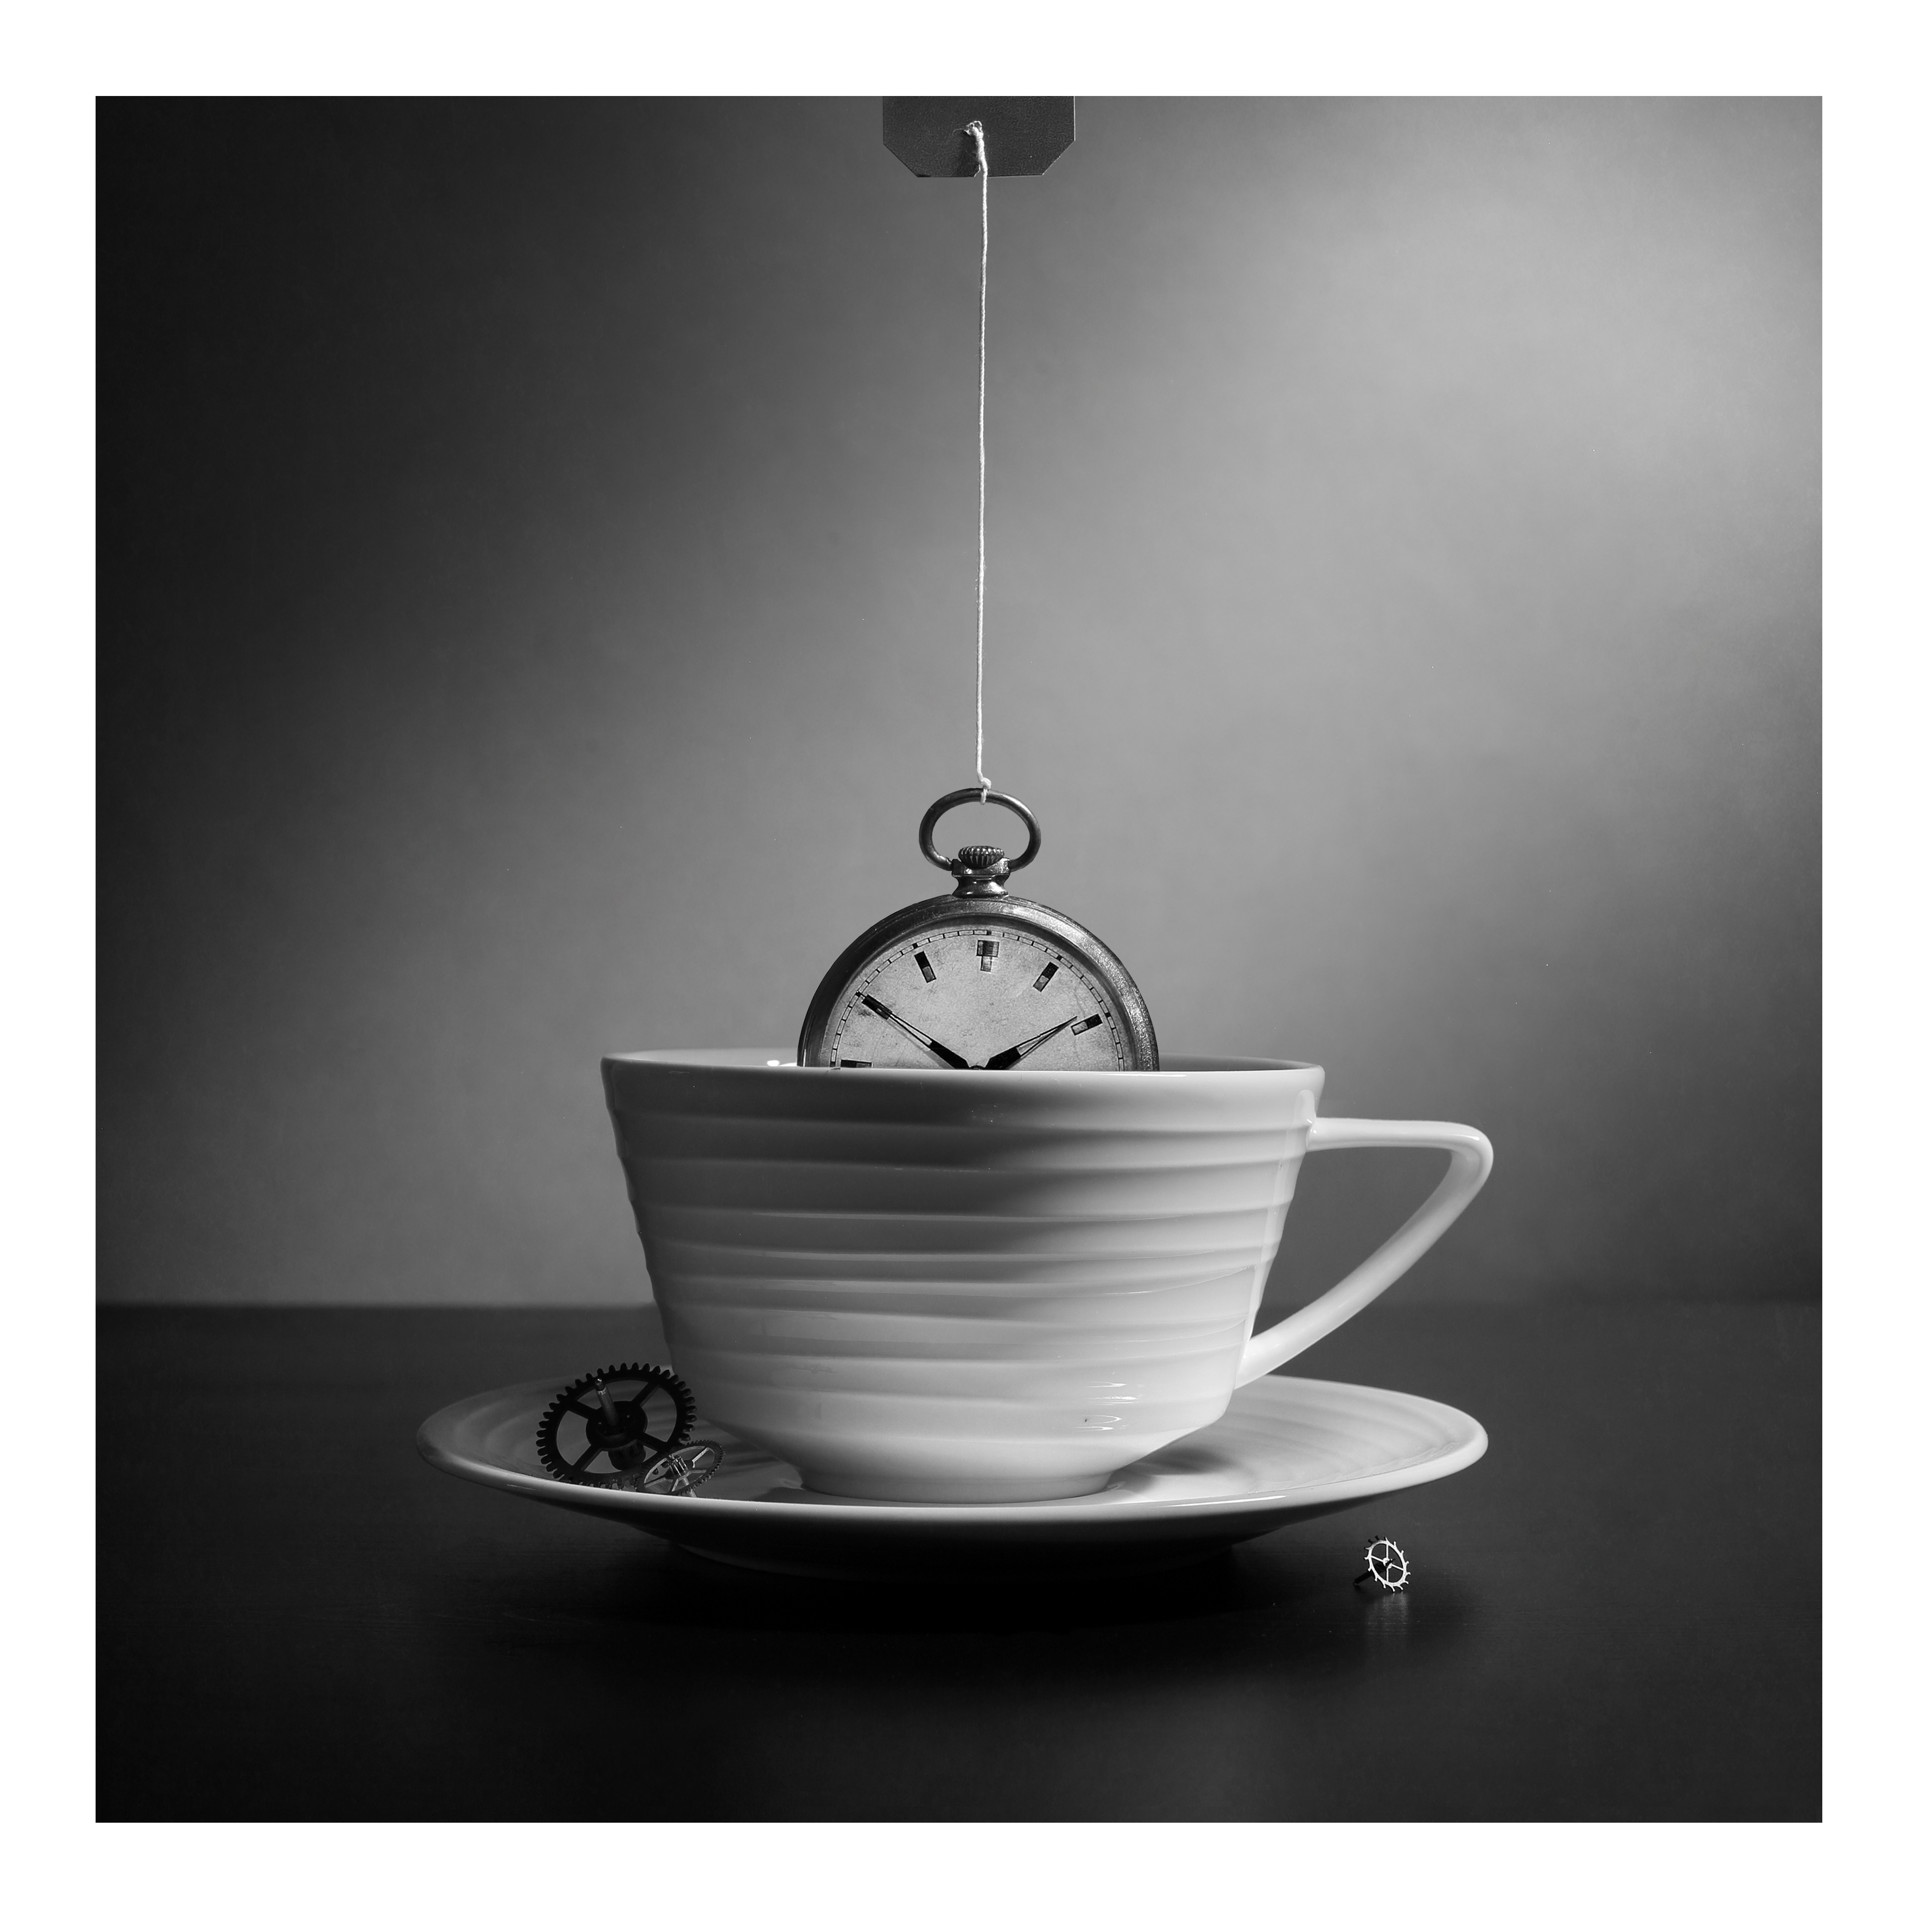 Tea Time by Victoria Ivanova